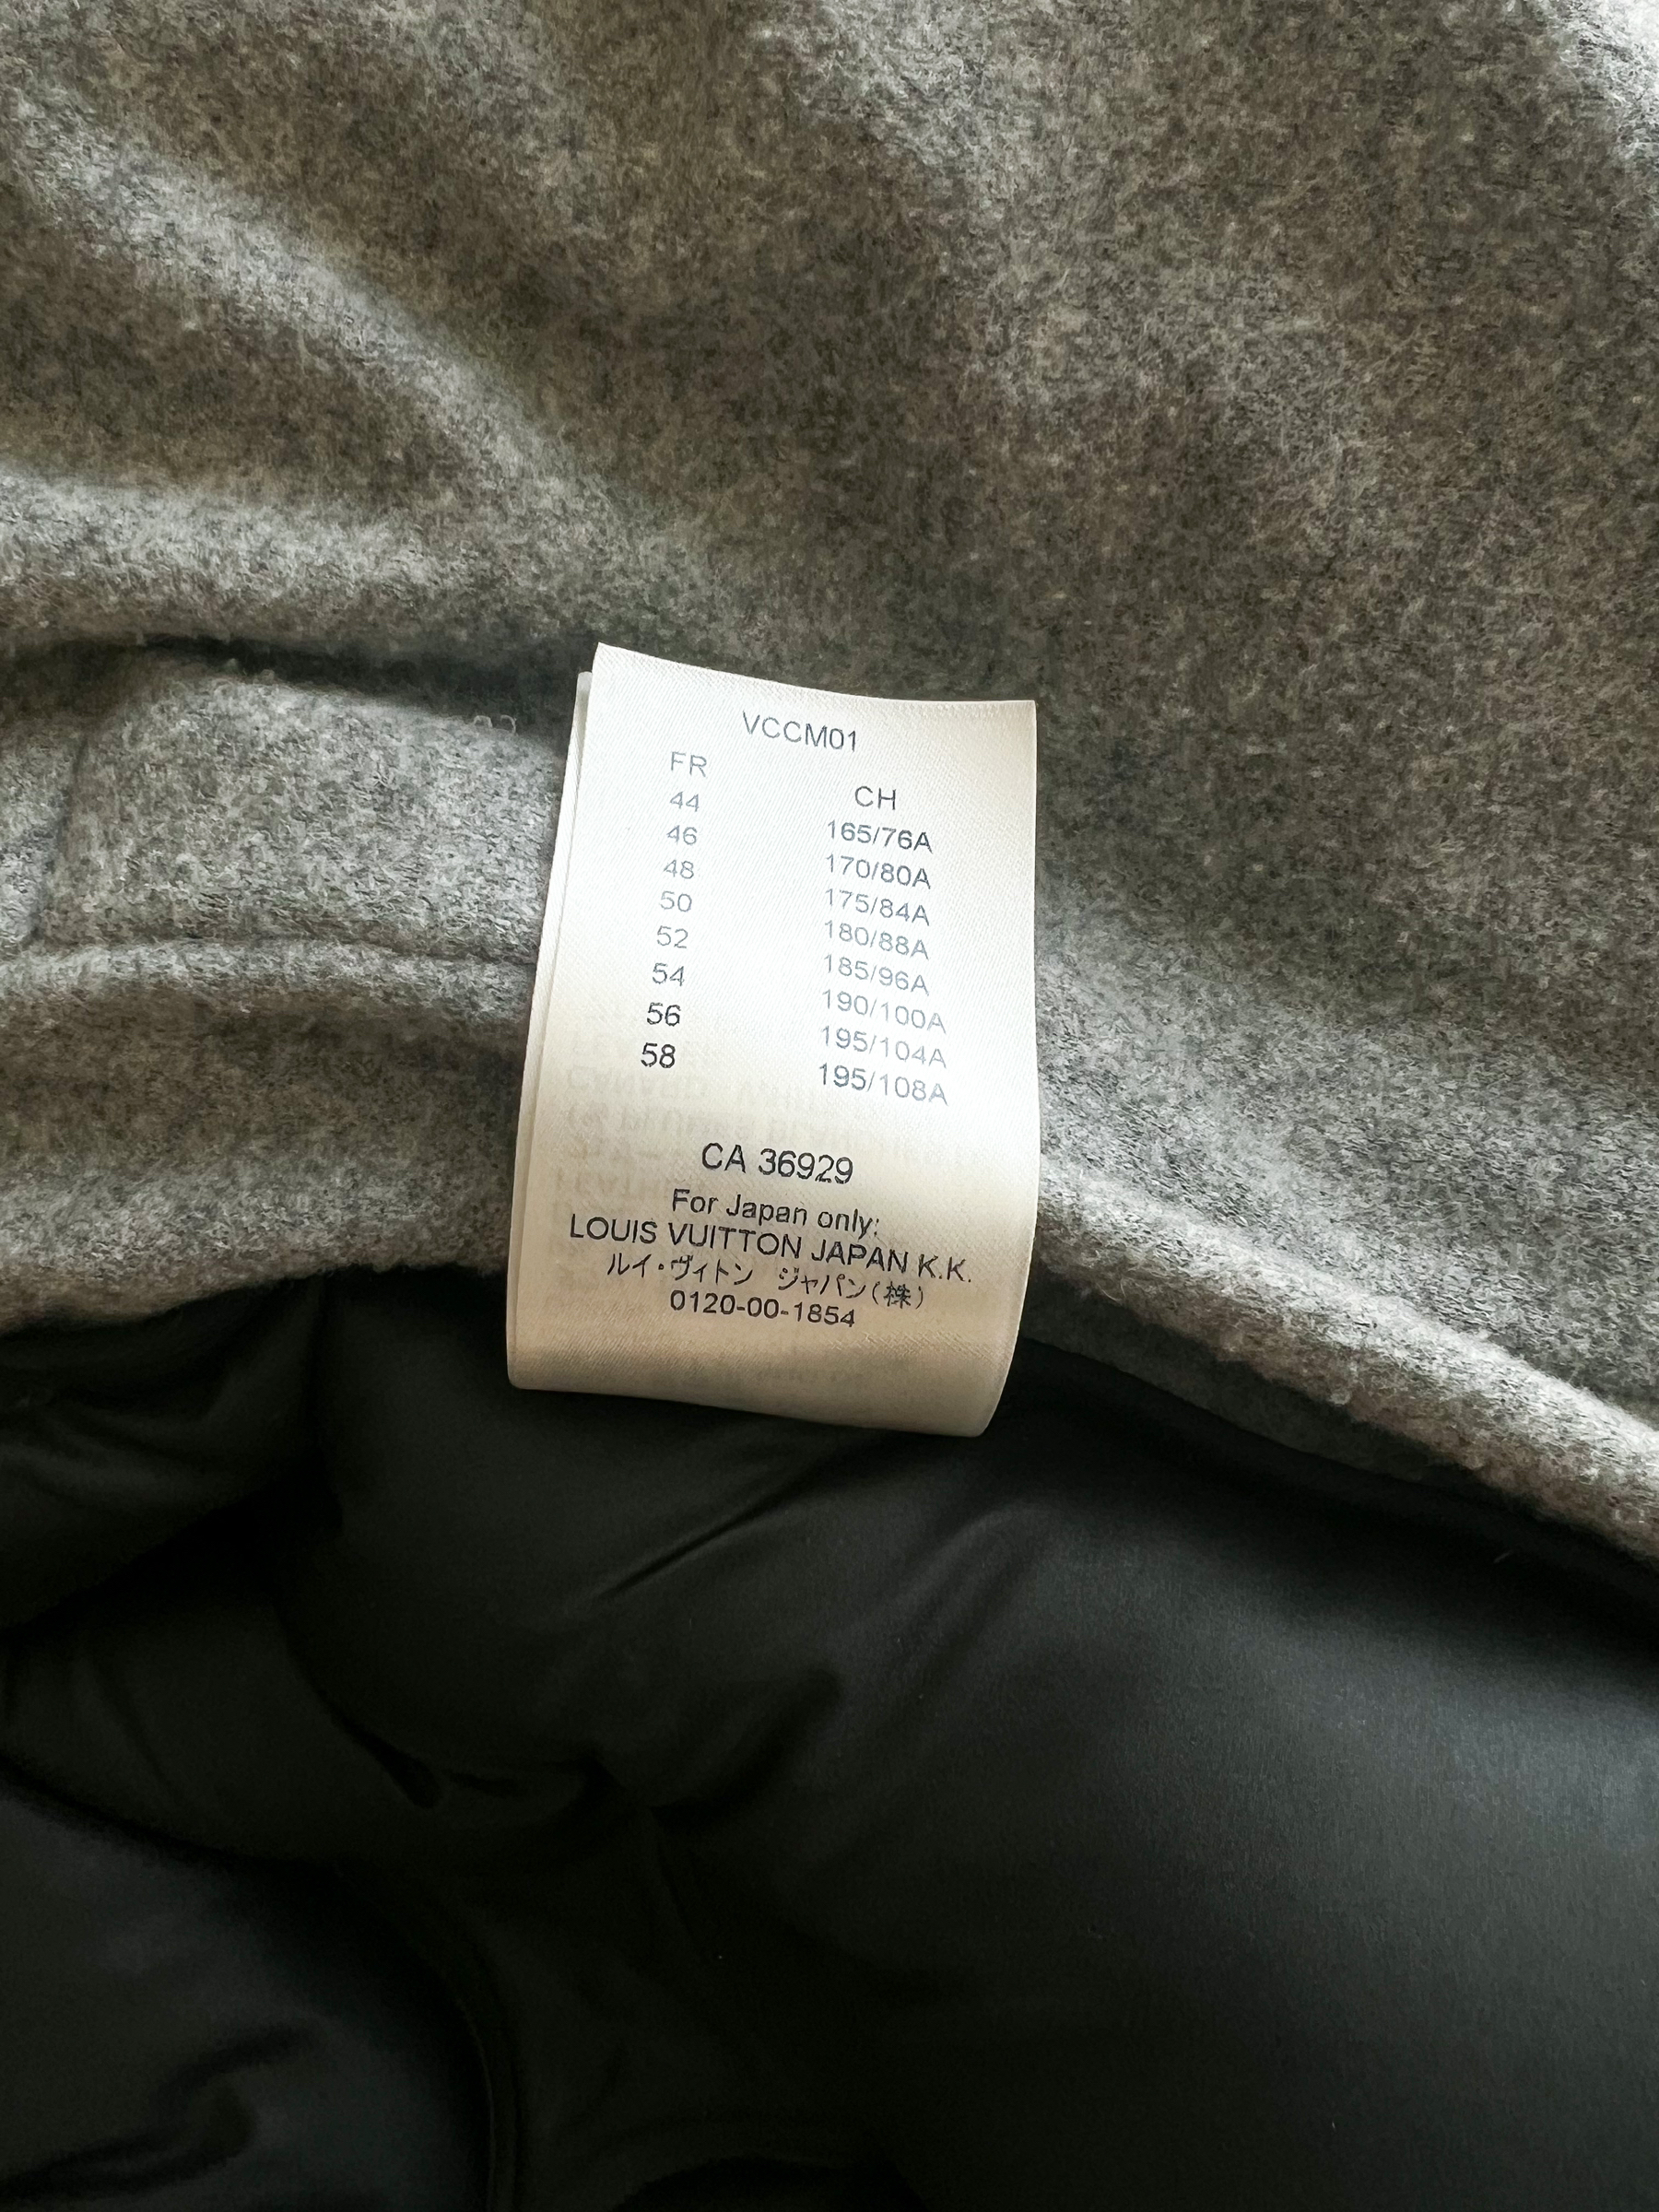 Louis Vuitton Grey Monogram Boyhood Puffer Jacket worn by Juice